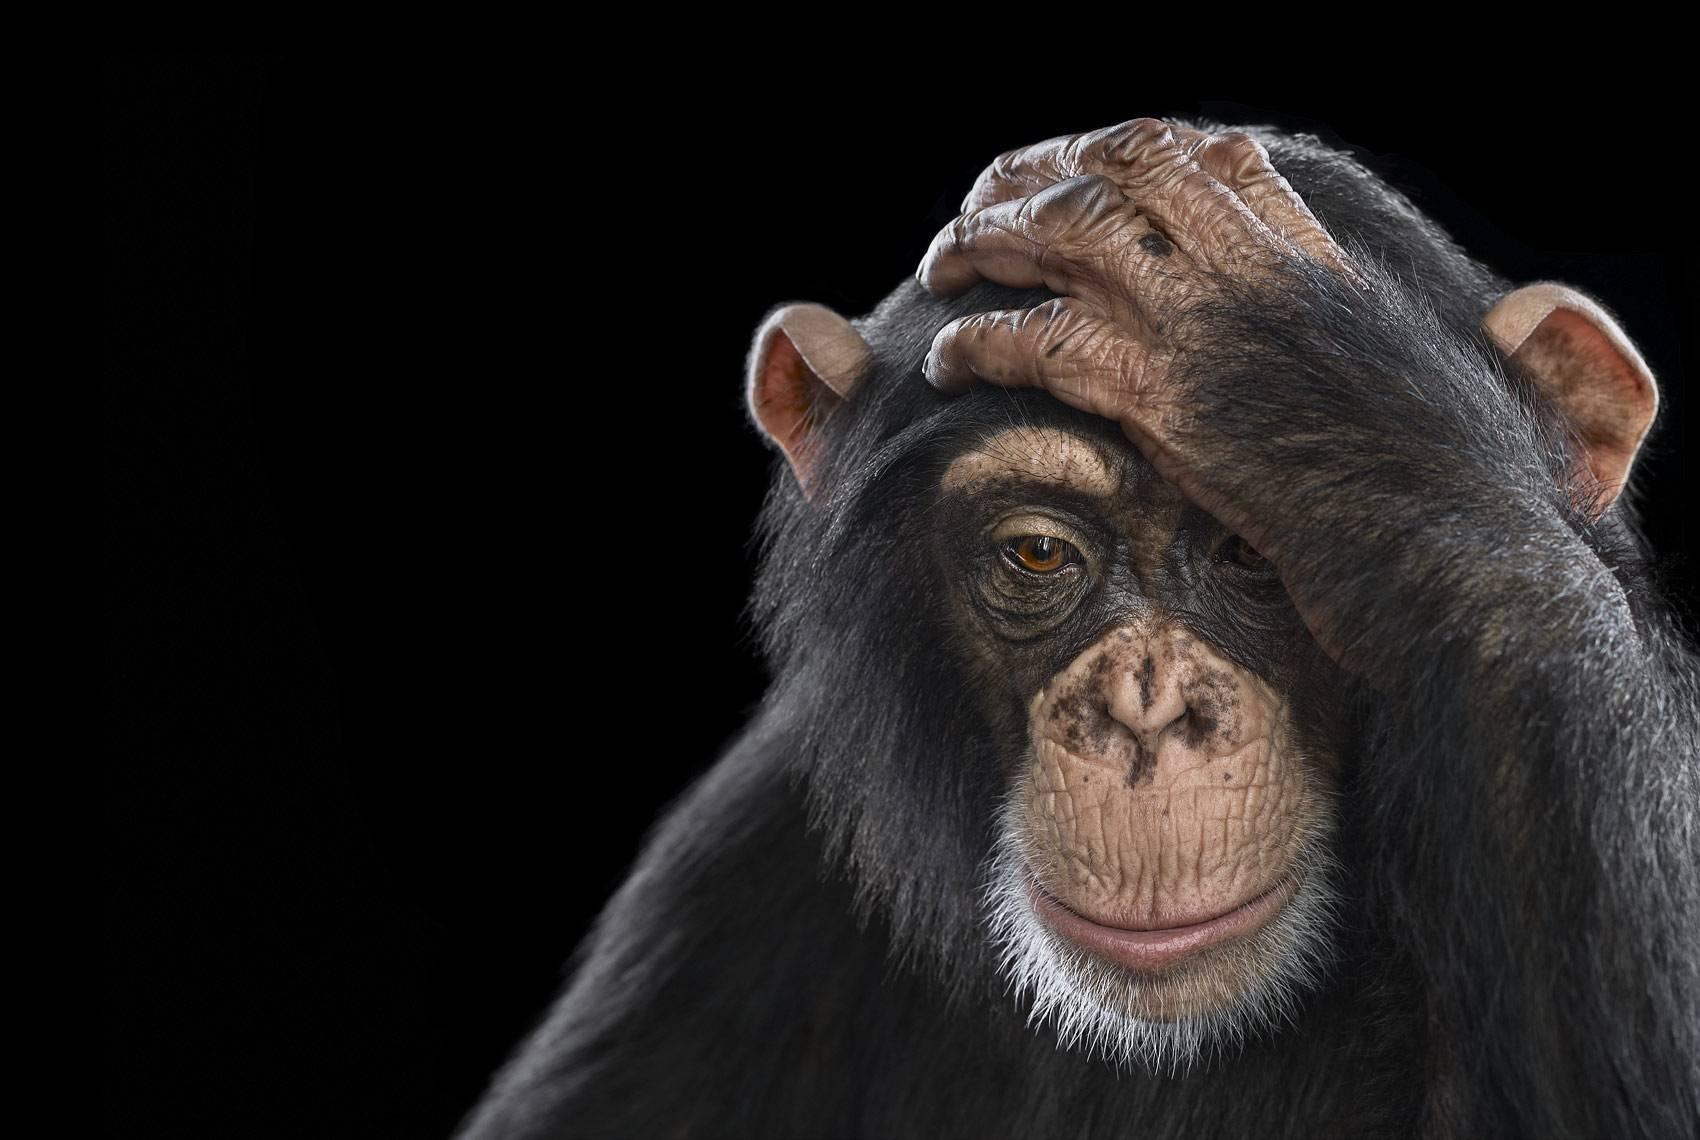 Brad Wilson Color Photograph – Chimpanzee #2, Los Angeles, Kalifornien, 2010